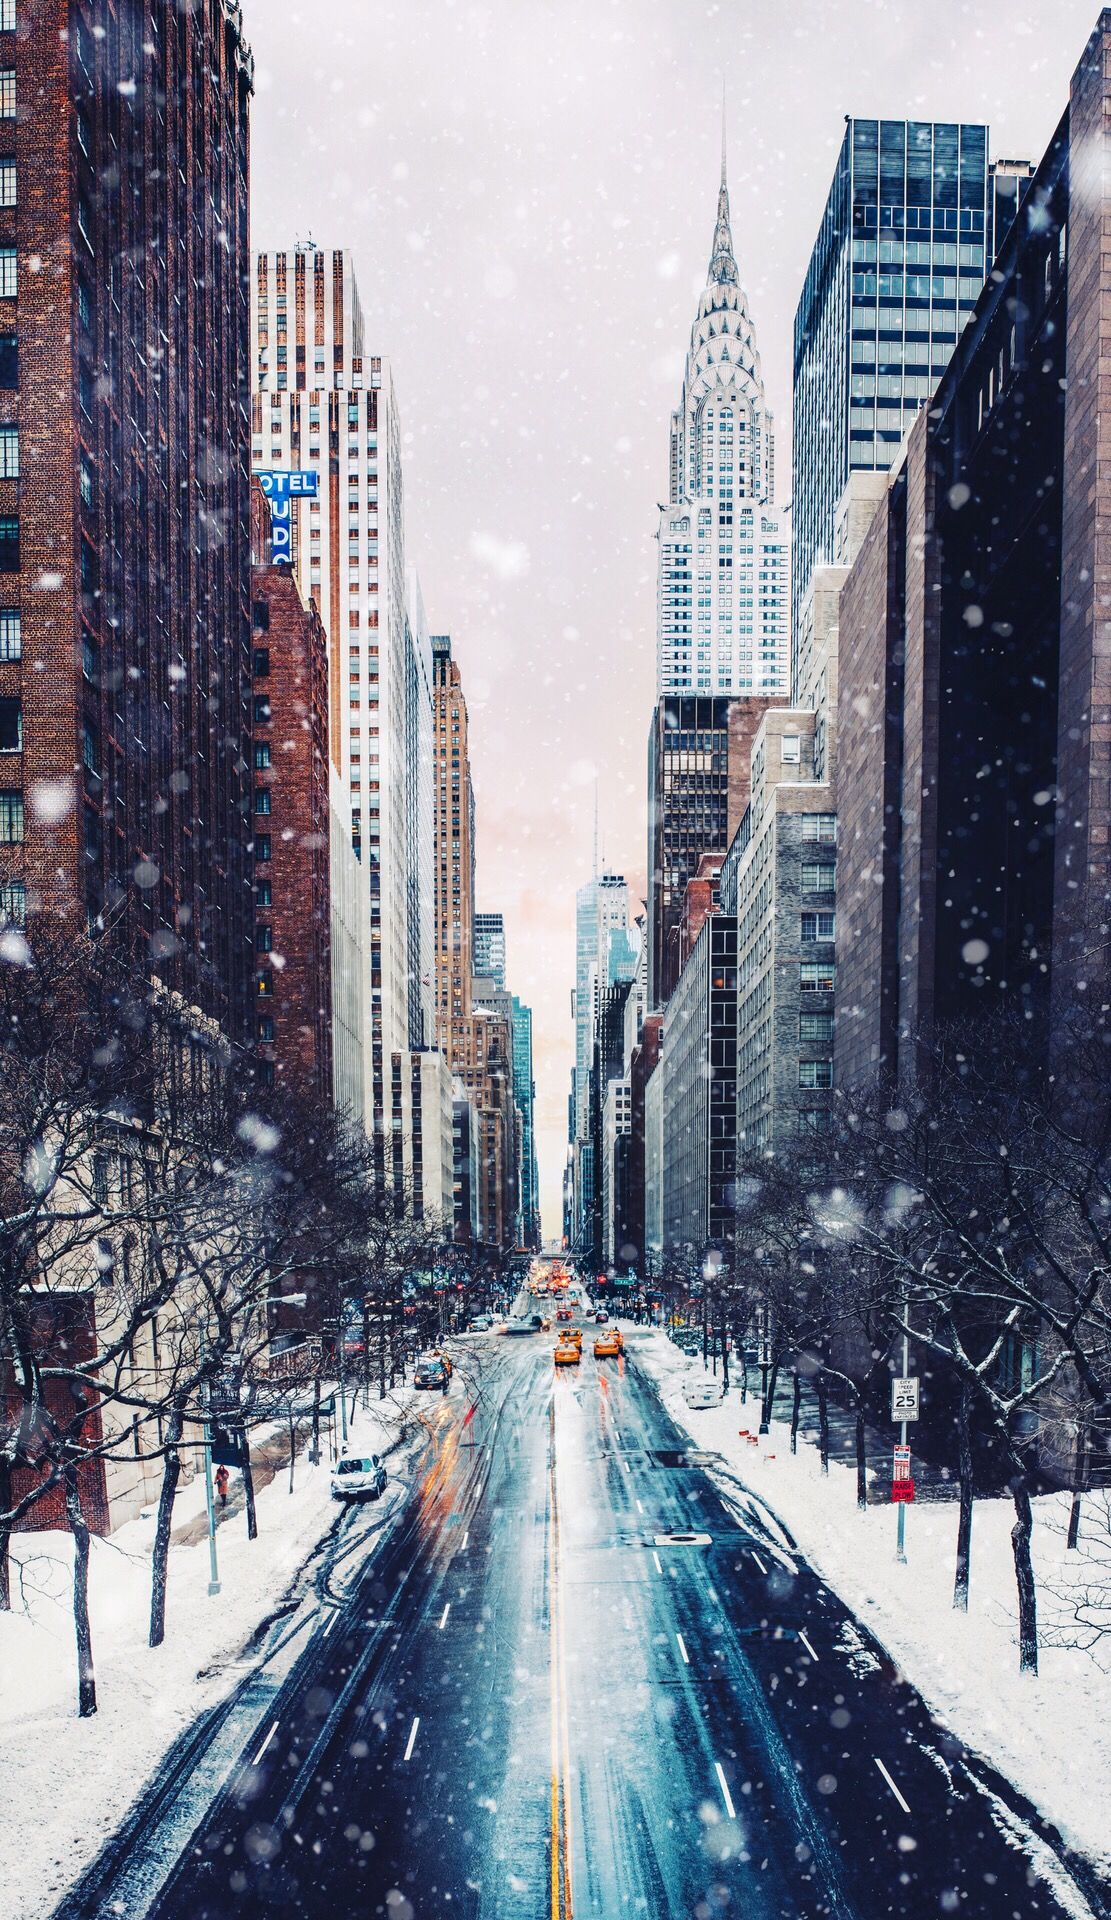 Img 3259 - Iphone Wallpaper New York Snow - HD Wallpaper 